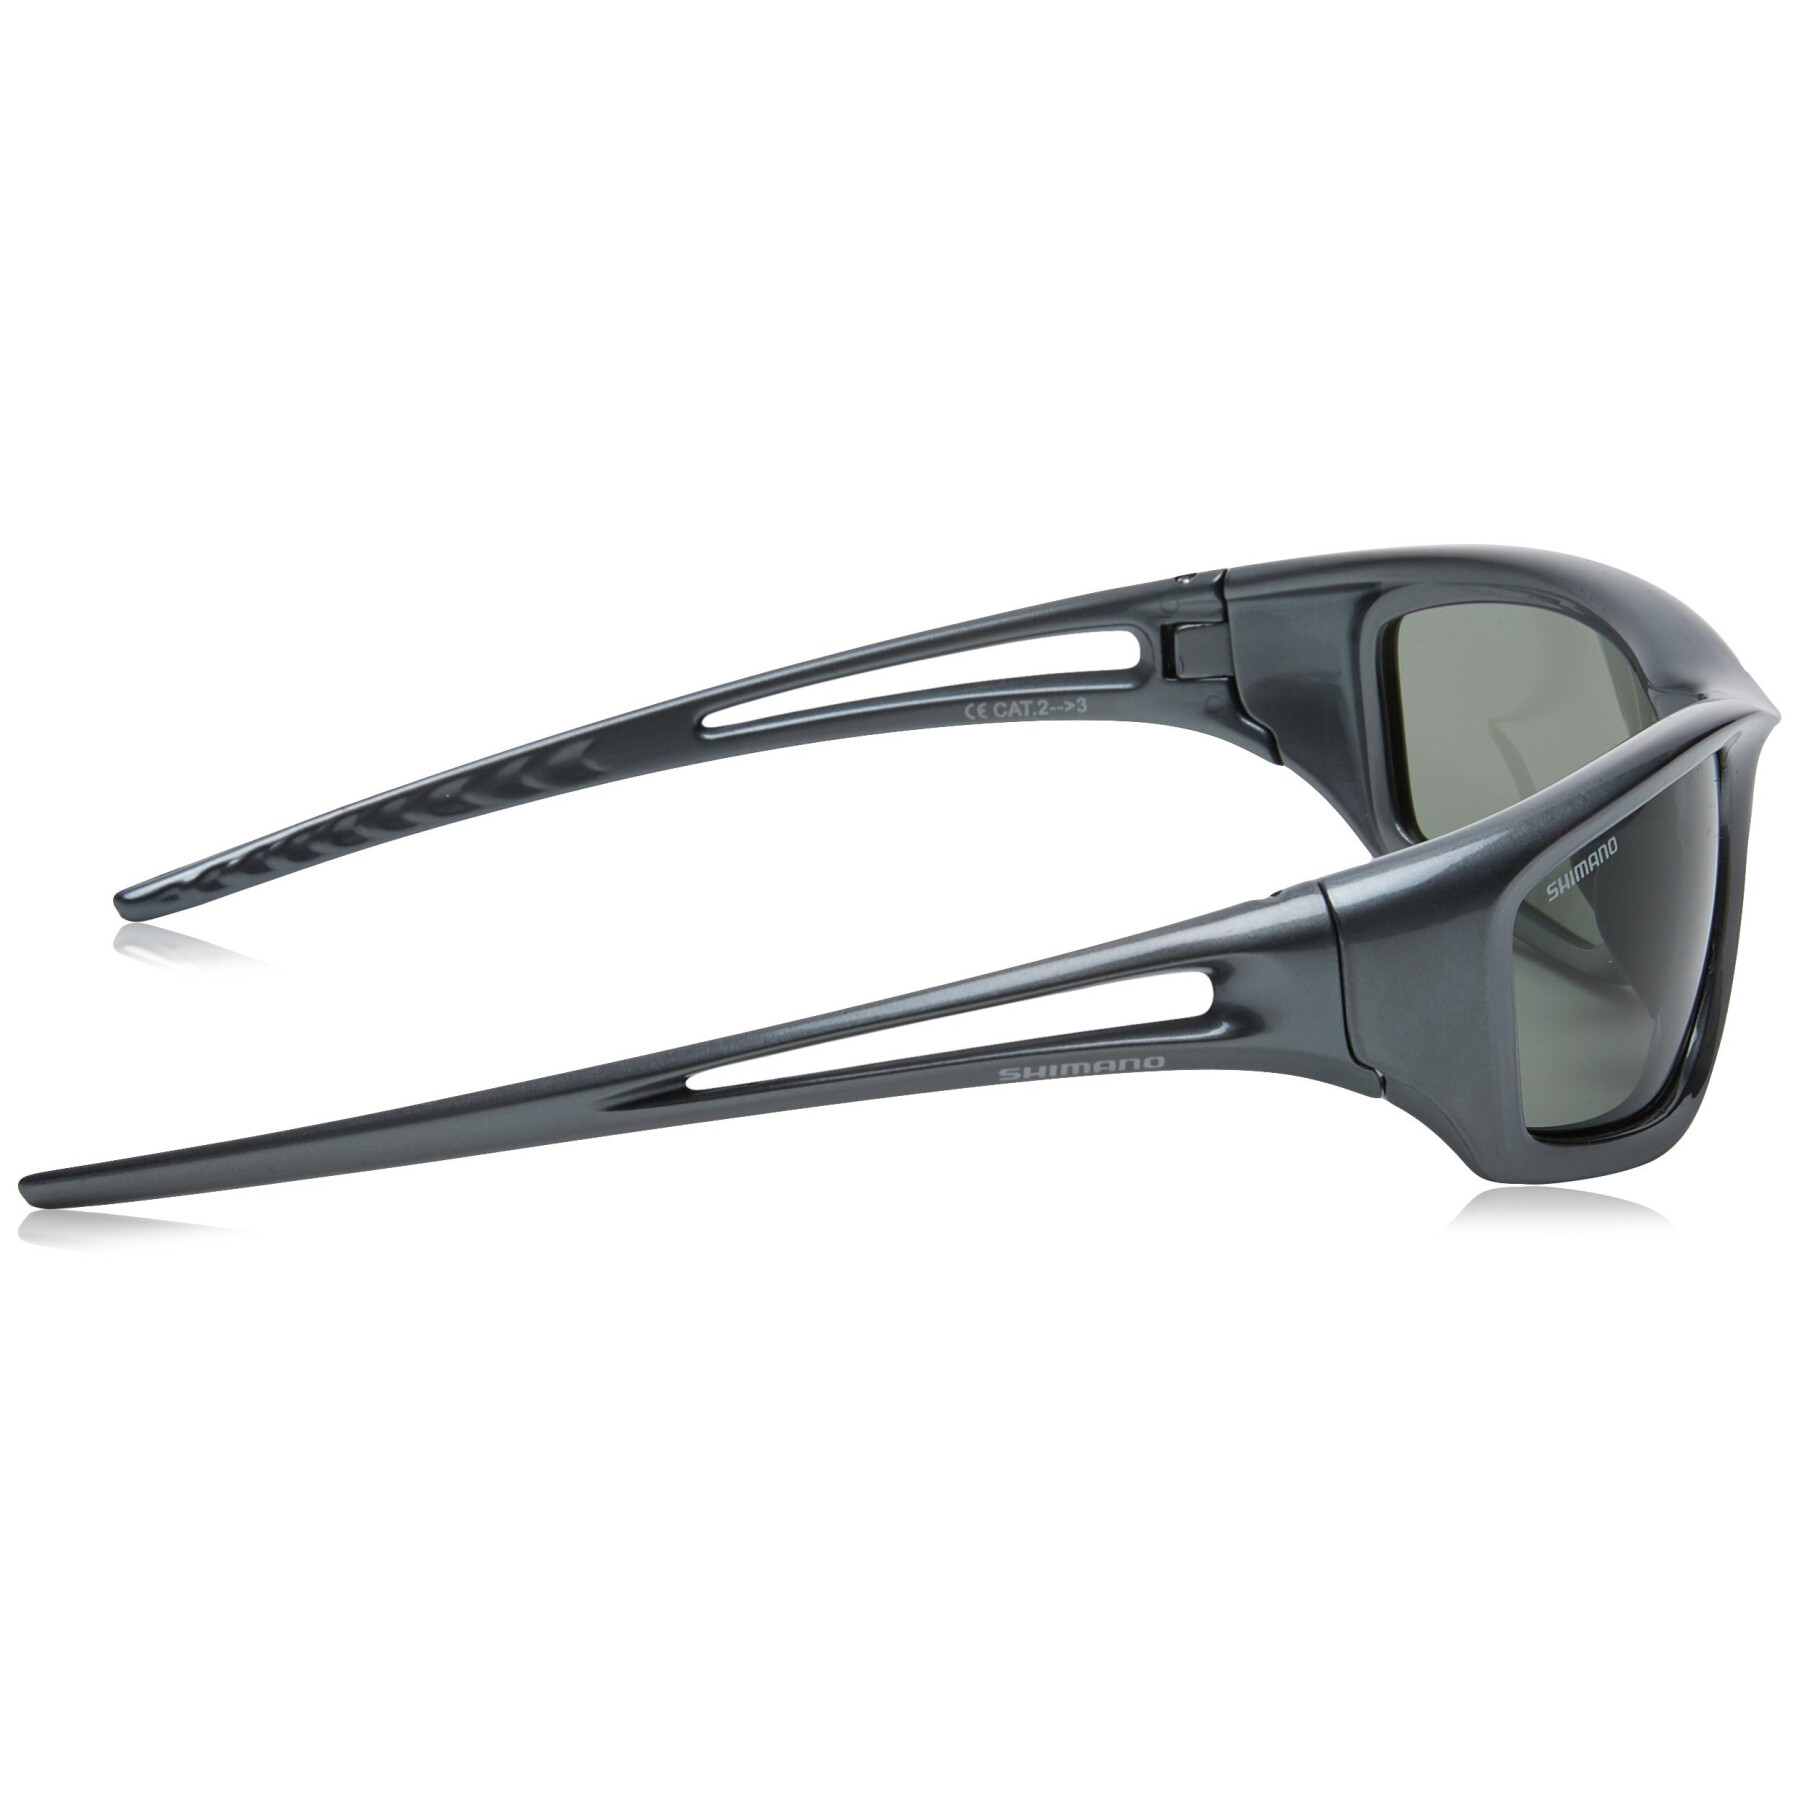 Sunglasses Shimano Biomaster